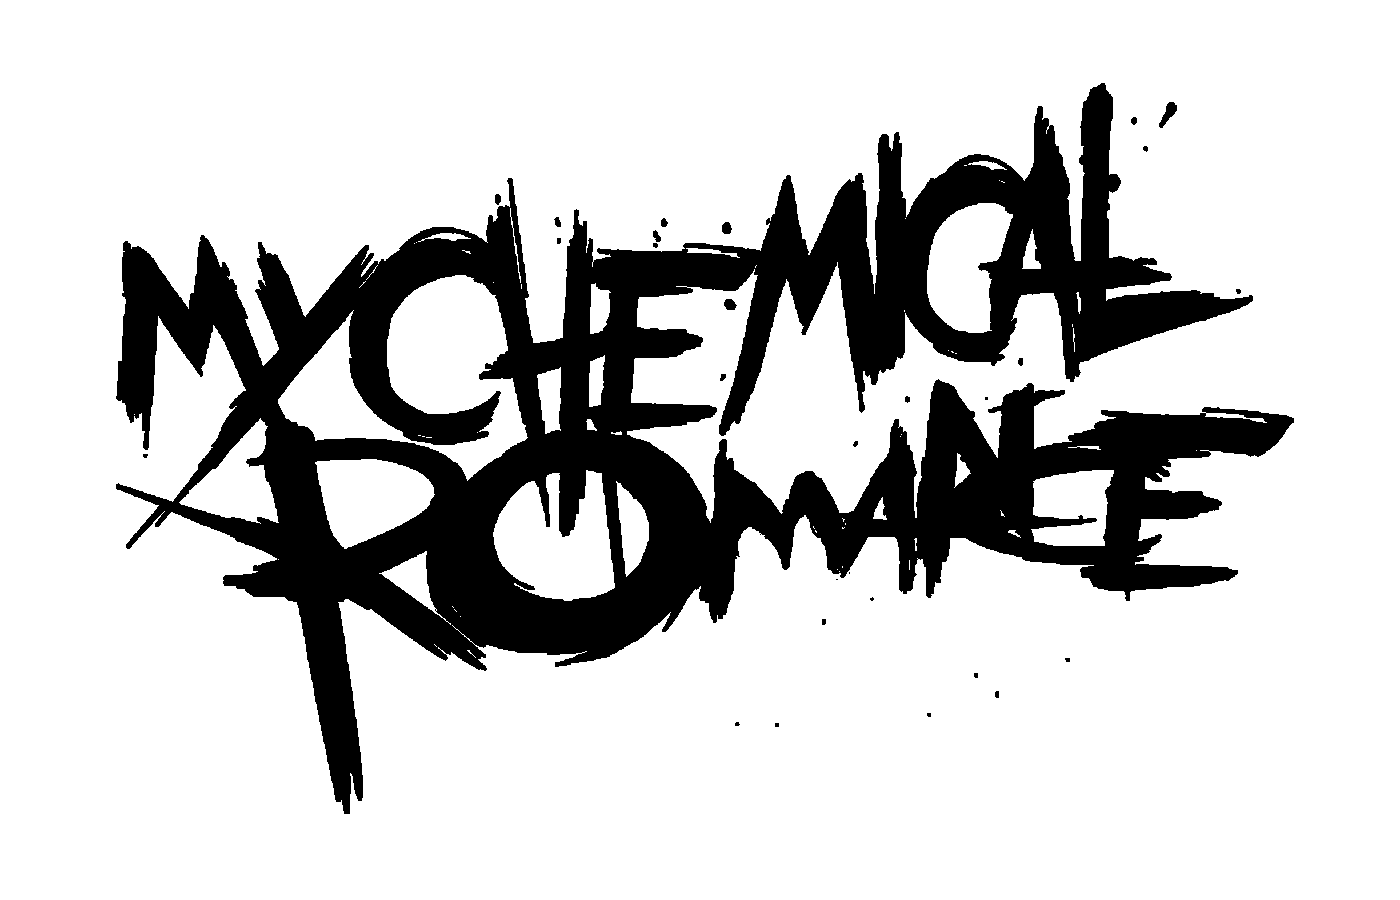 Chemcel Logo - My Chemical Romance Logo, My Chemical Romance Symbol, Meaning ...